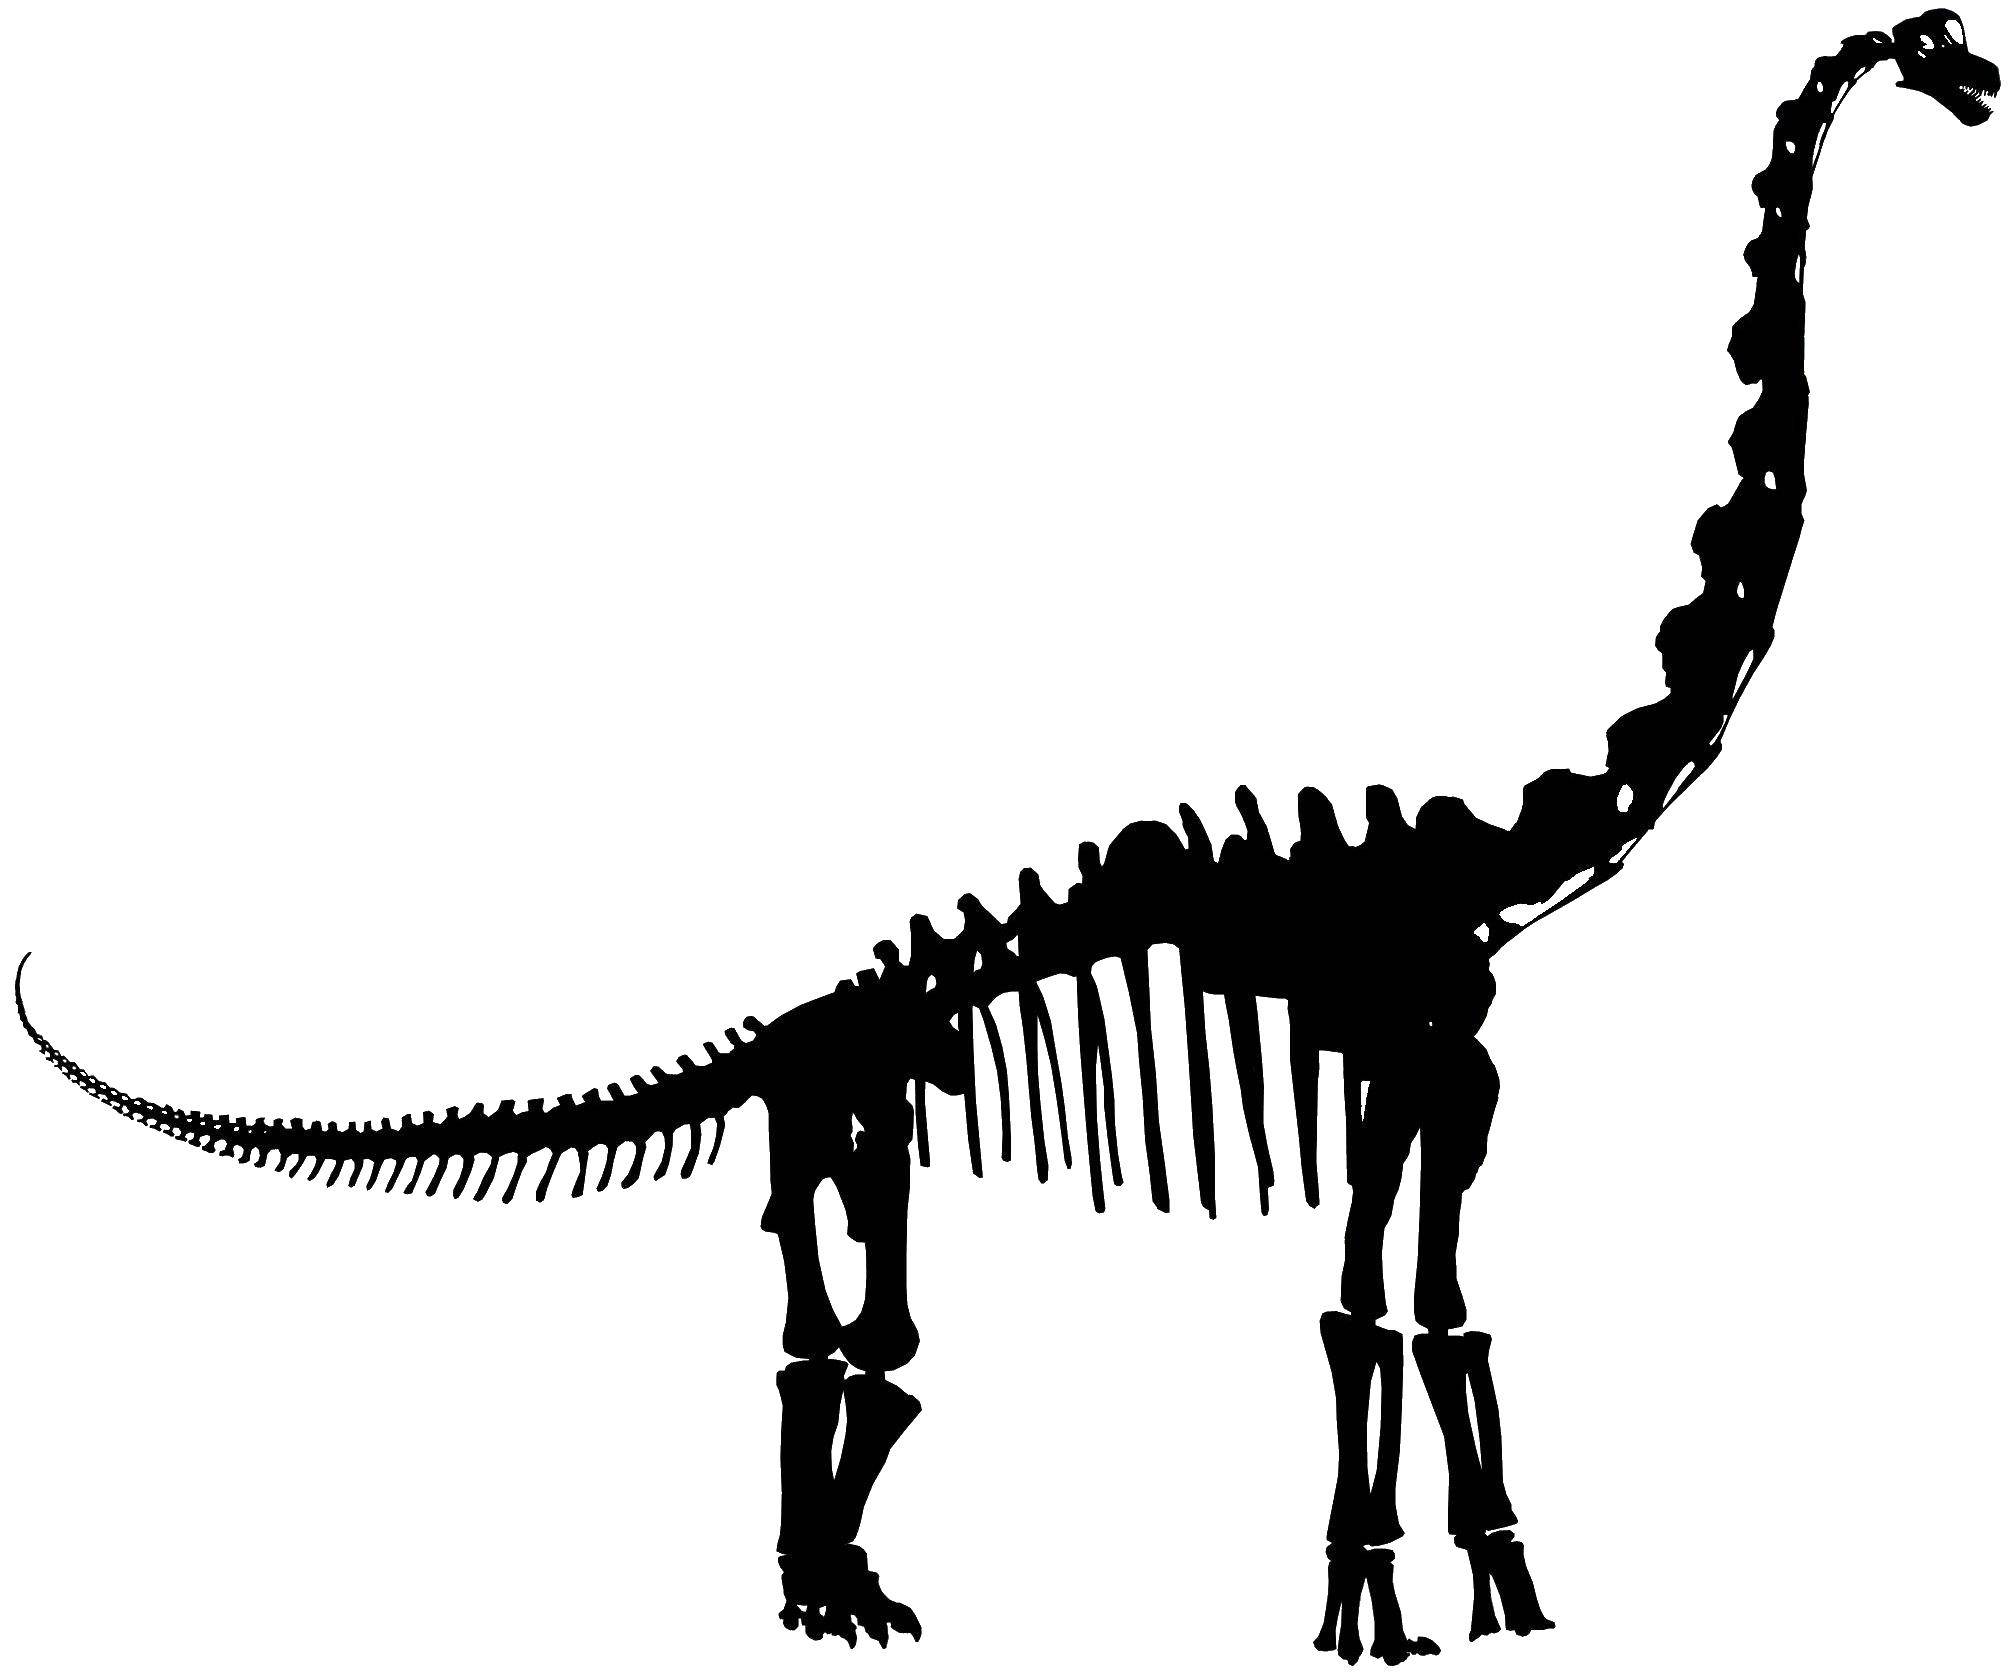 Название: Раскраска Кости динозавра. Категория: динозавр. Теги: кости, динозавры.